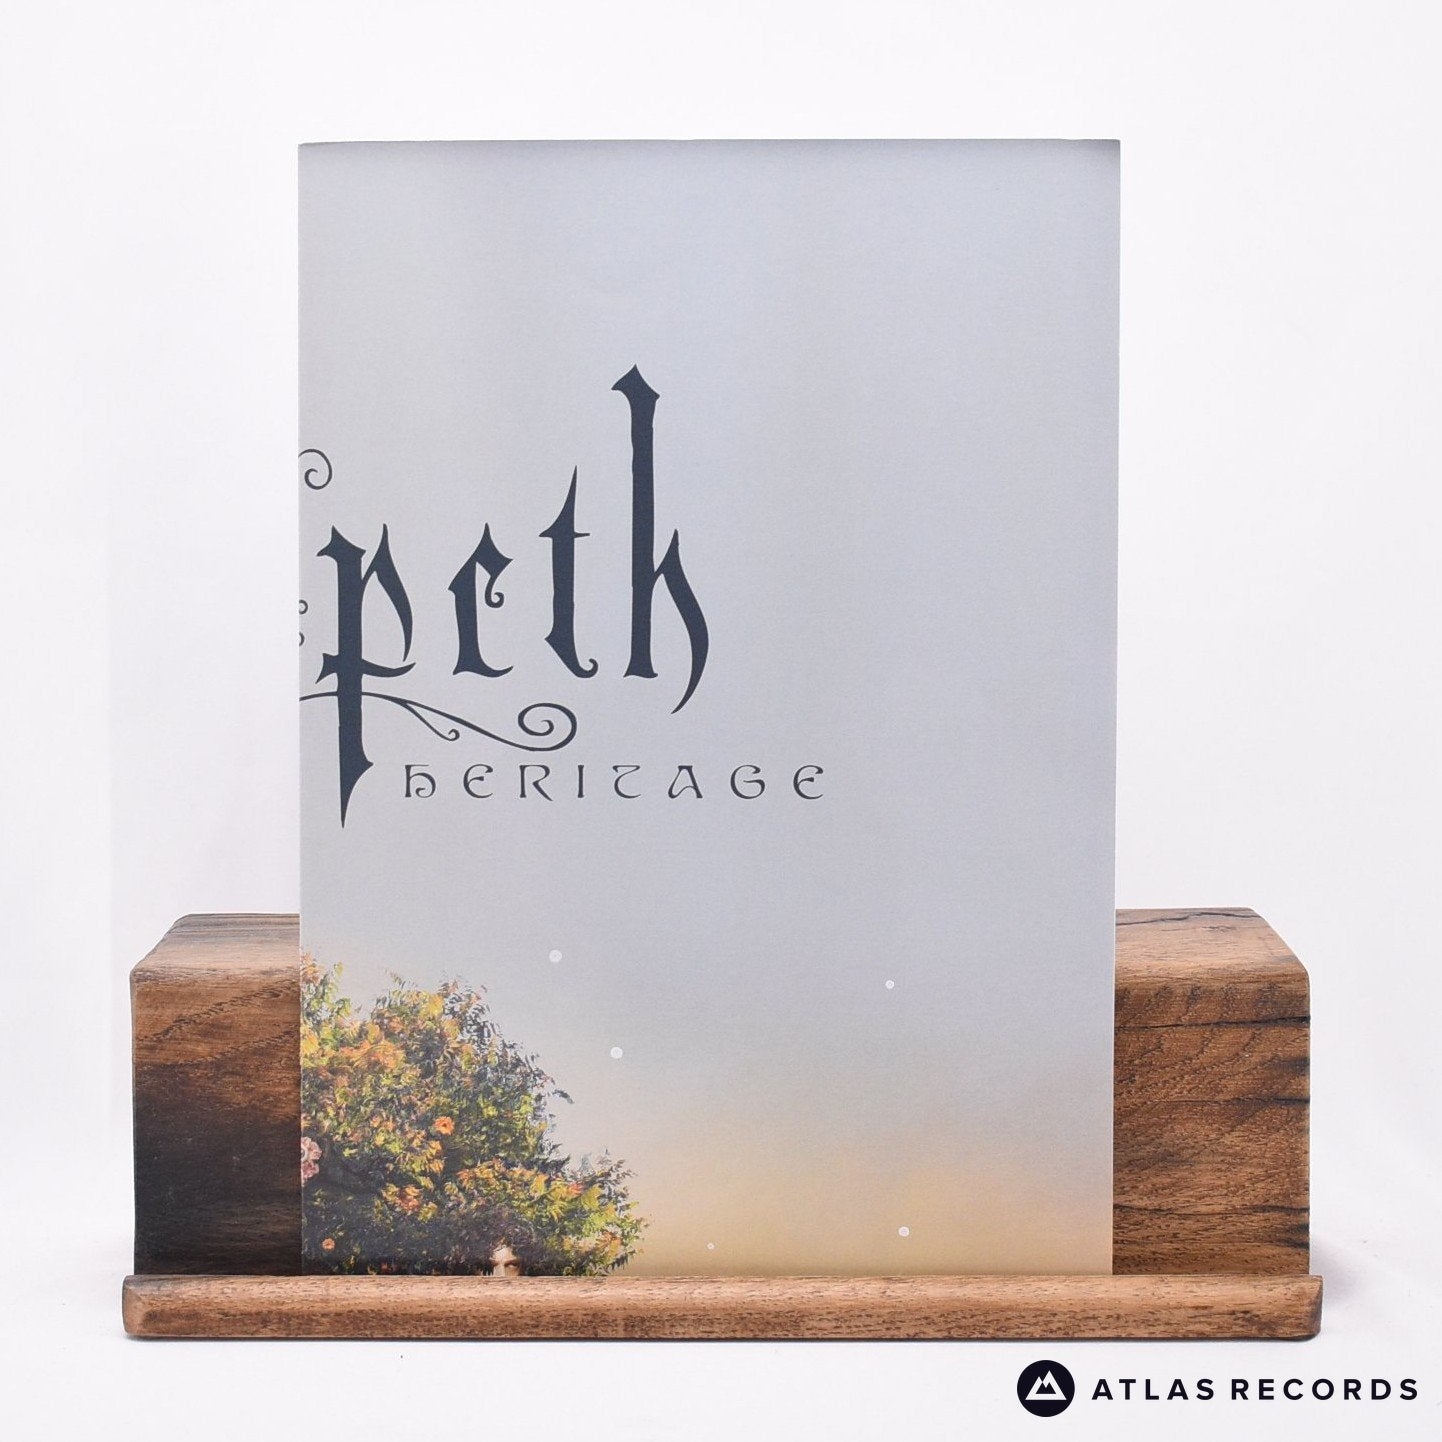 Opeth - Heritage - 180g,Double LP Record - NM/EX Atlas Records